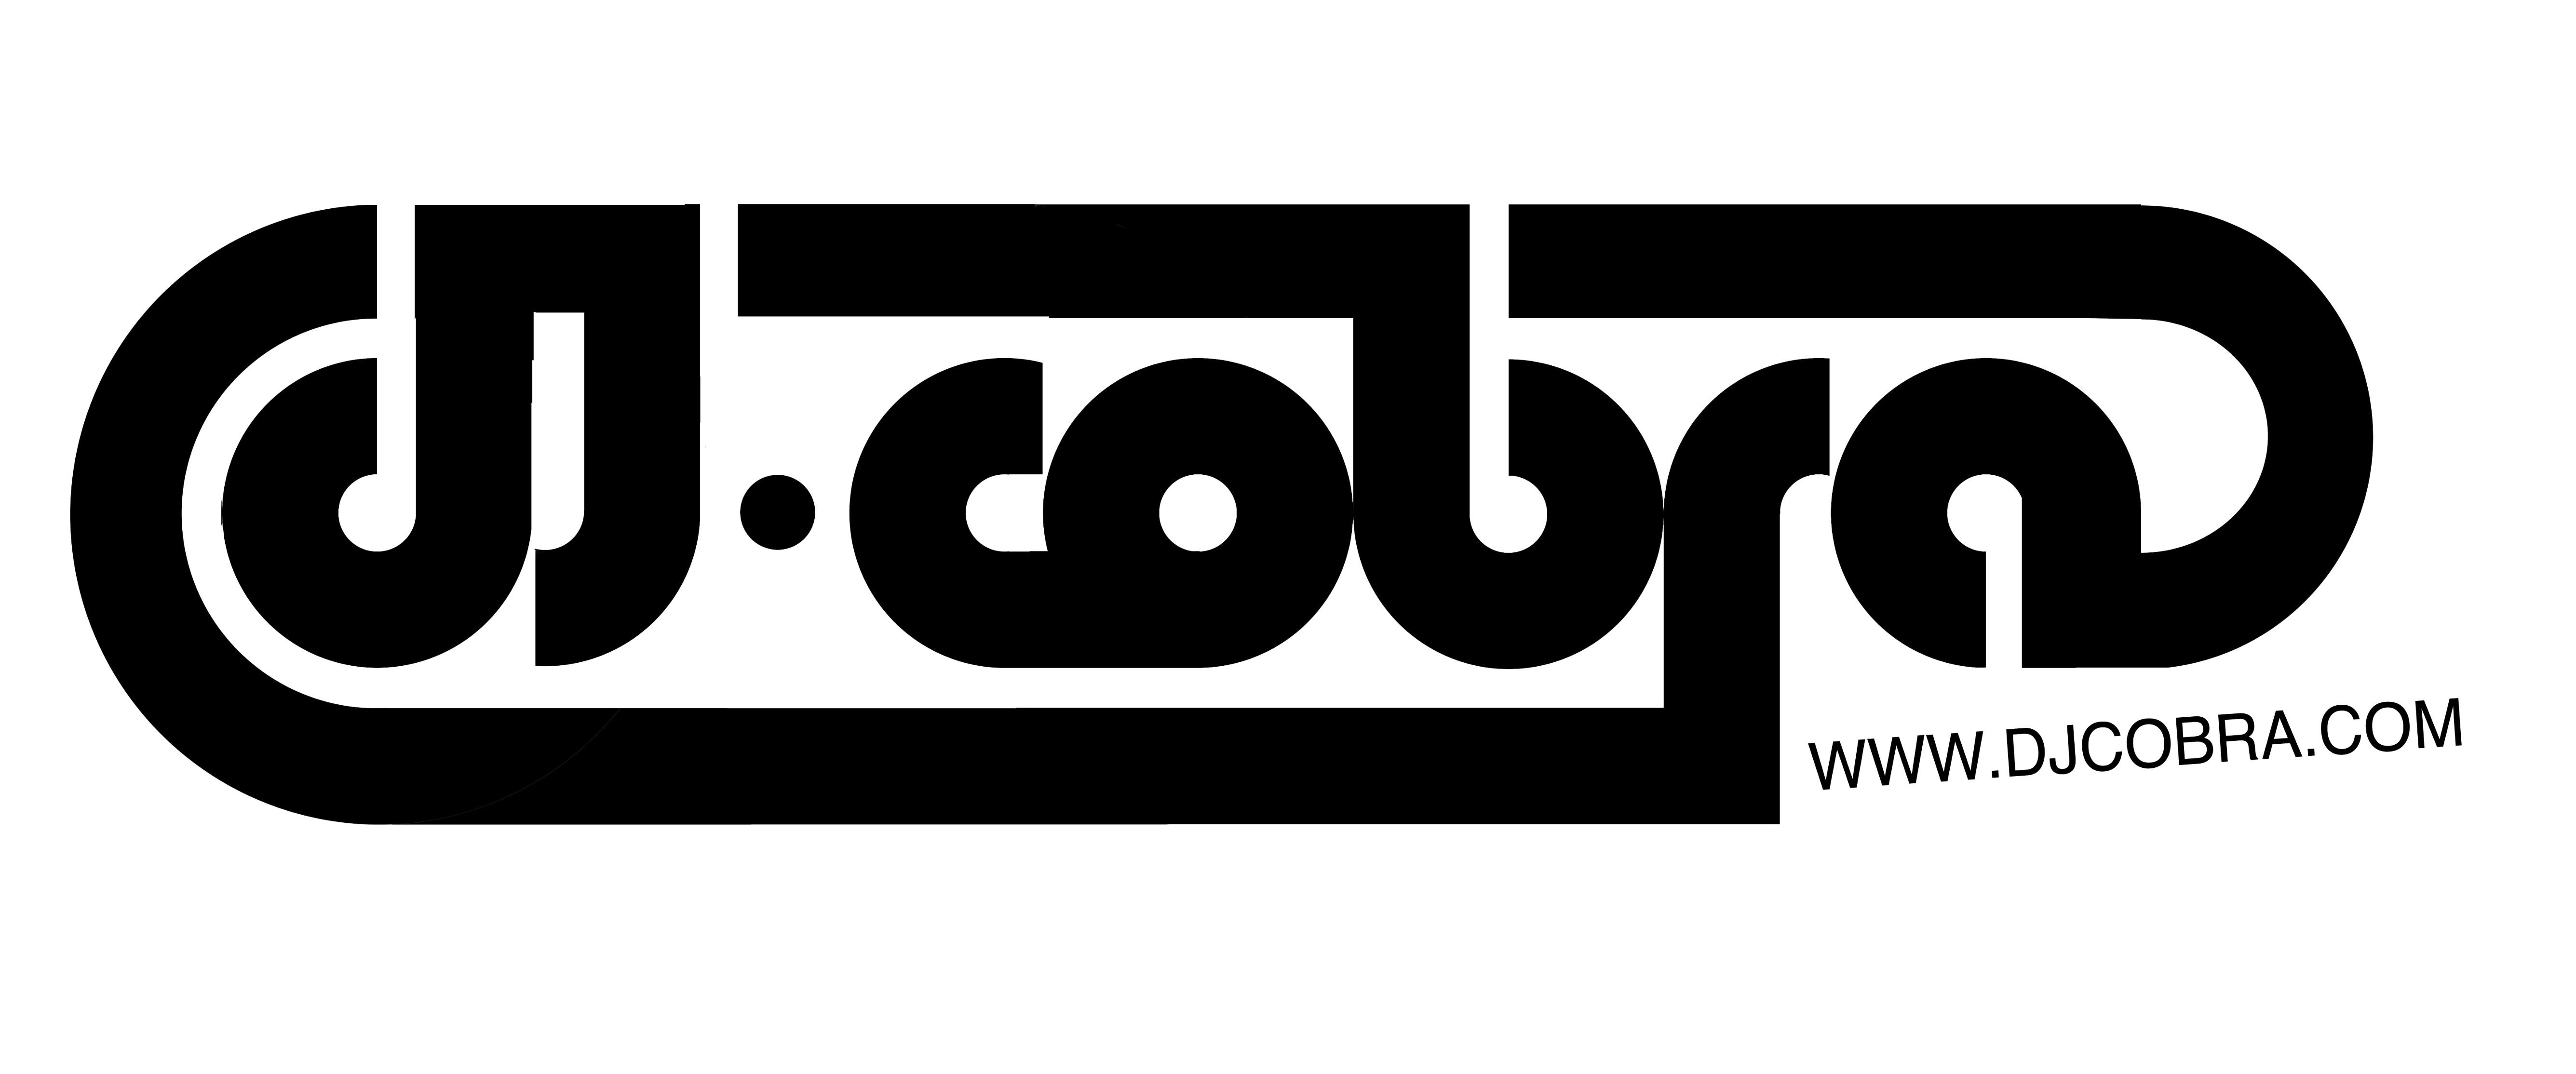 Cobra CB Logo - File:DJ Cobra Logo.png - Wikimedia Commons